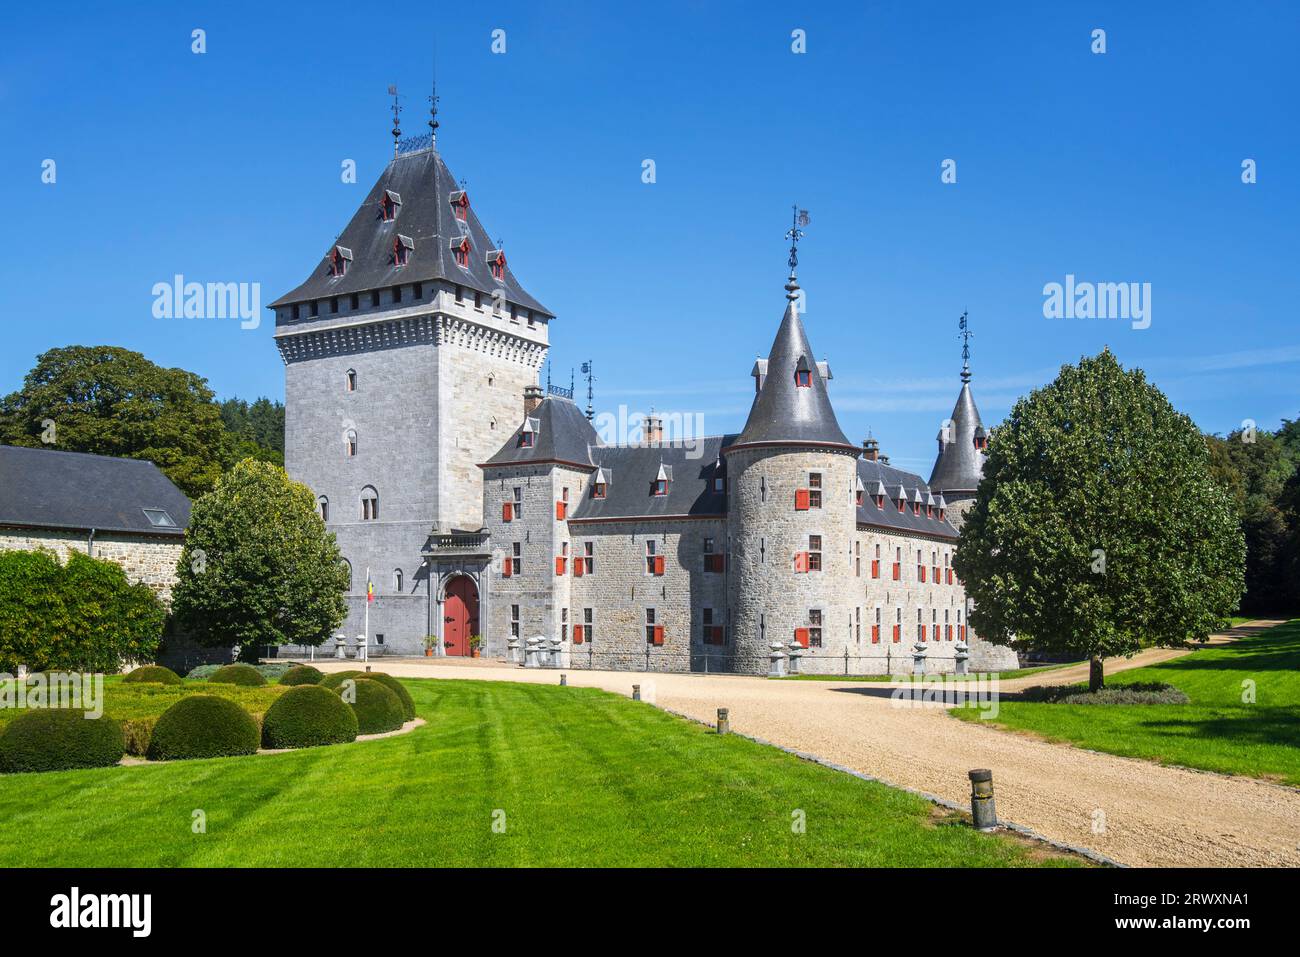 Castillo Jemeppe del siglo XIII / Château d'Hargimont en Hargimont cerca de Marche-en-Famenne, provincia de Luxemburgo, Ardenas belgas, Valonia, Bélgica Foto de stock